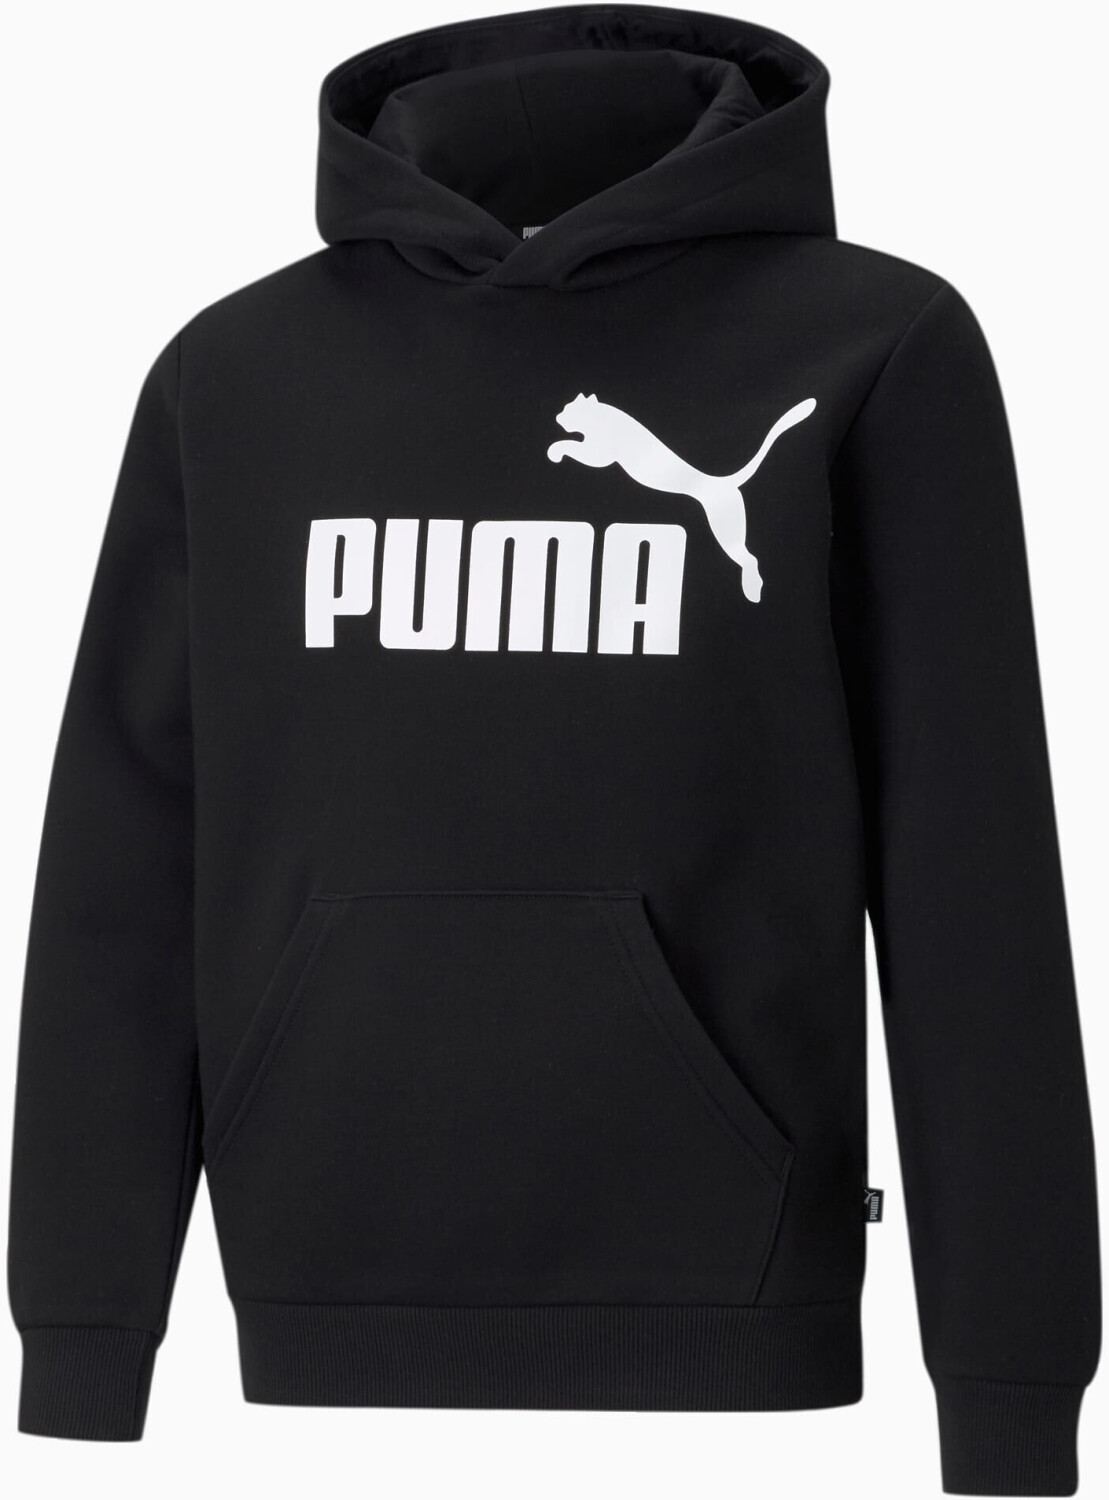 Puma Essentials Big Logo Youth Hoodie black ab 20,85 € | Preisvergleich bei